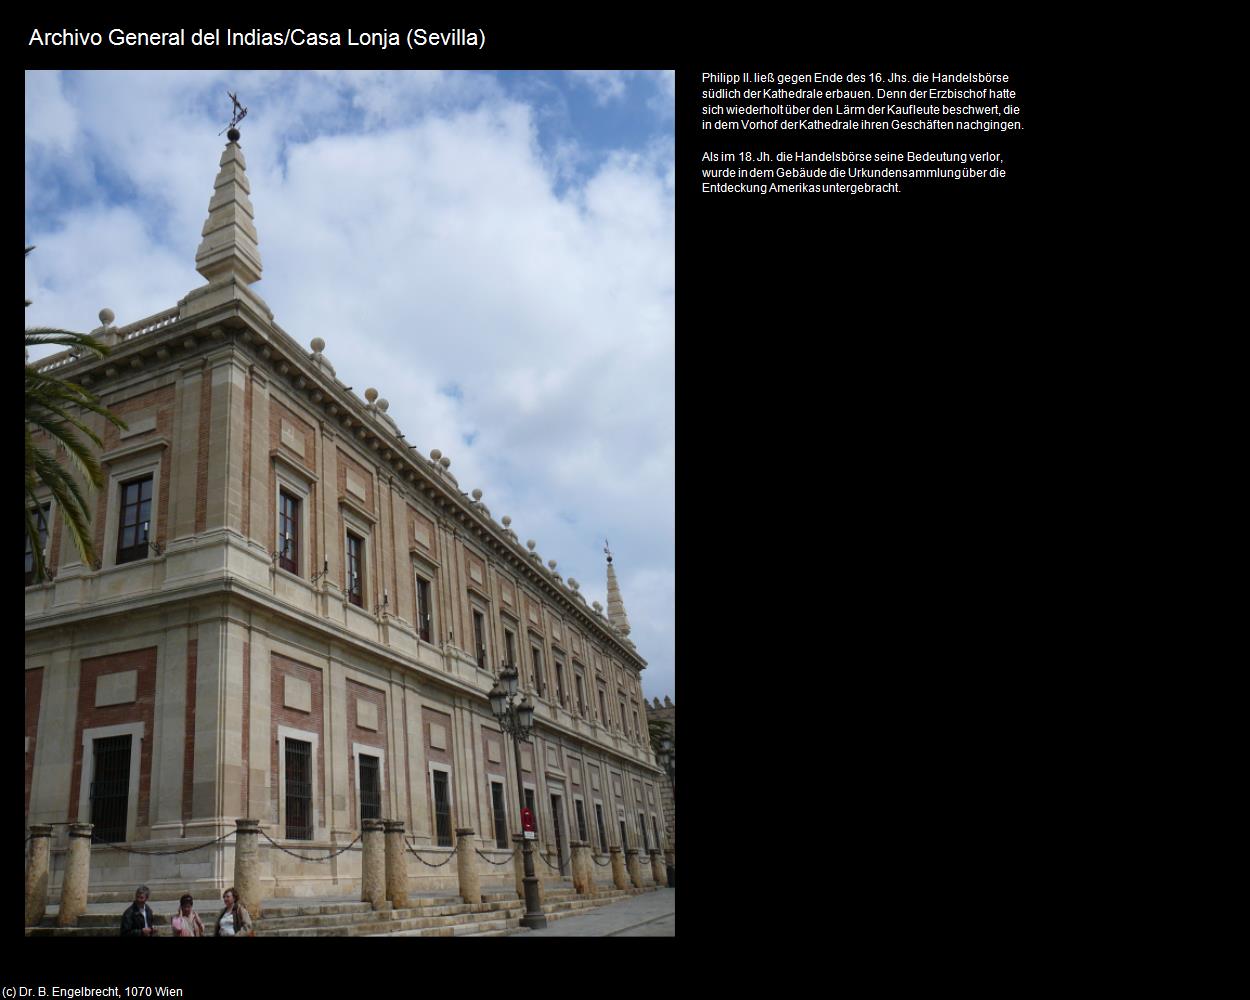 Archivo General del Indias/Casa Lonja (Sevilla) in ANDALUSIEN